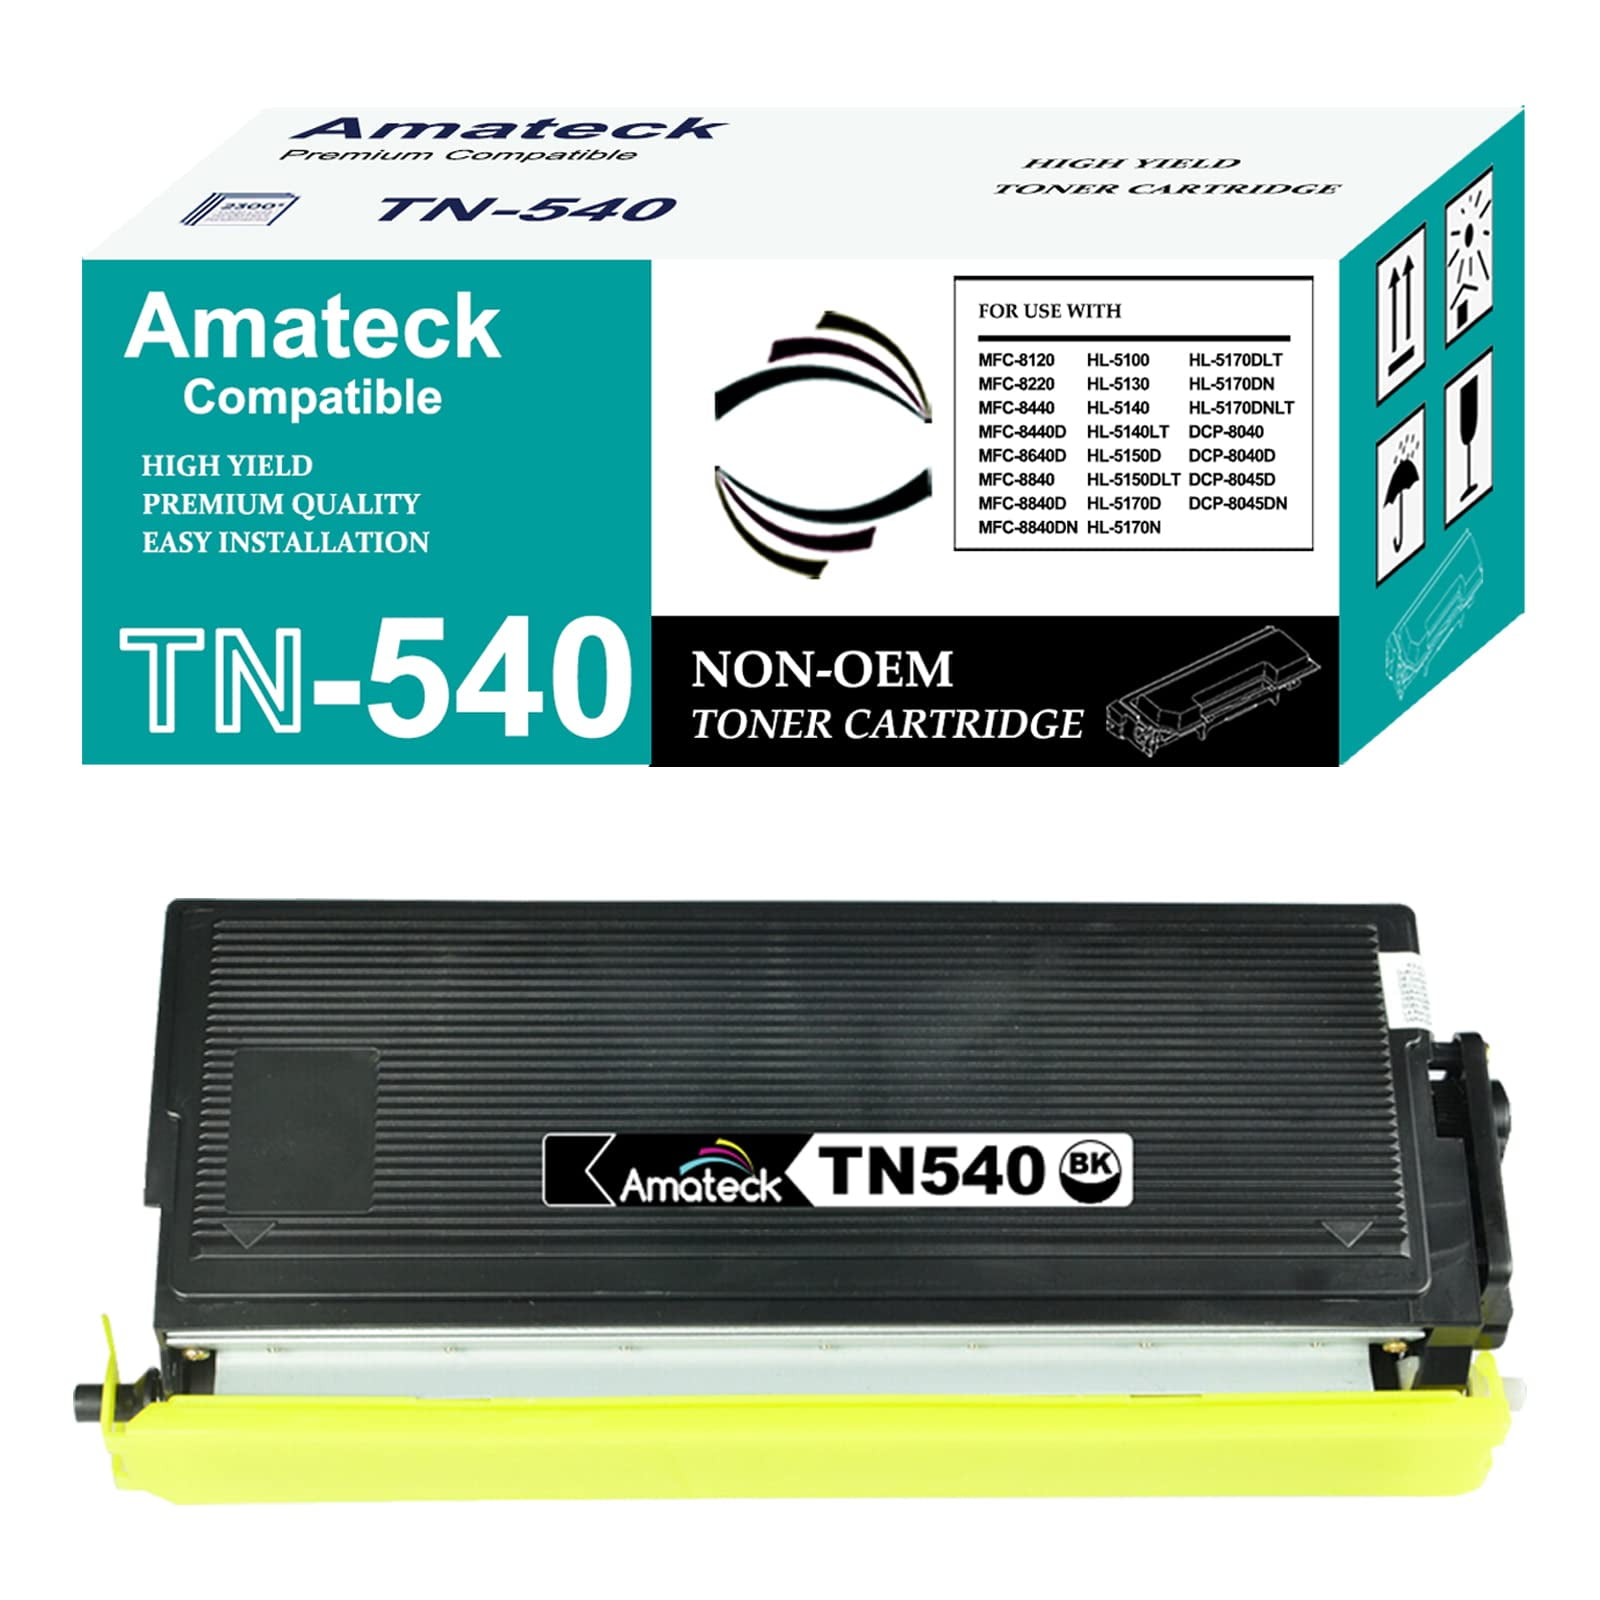 miles torsdag Barry Amateck Compatible Toner Cartridge Replacement for Brother TN540 Black 1  Pack for MFC-8120, MFC-8220, MFC-8440, MFC-8840, HL-5100, HL-5130, HL-5140,  HL-5170D, DCP-8040, DCP-8045D, DCP-8045DN - Walmart.com